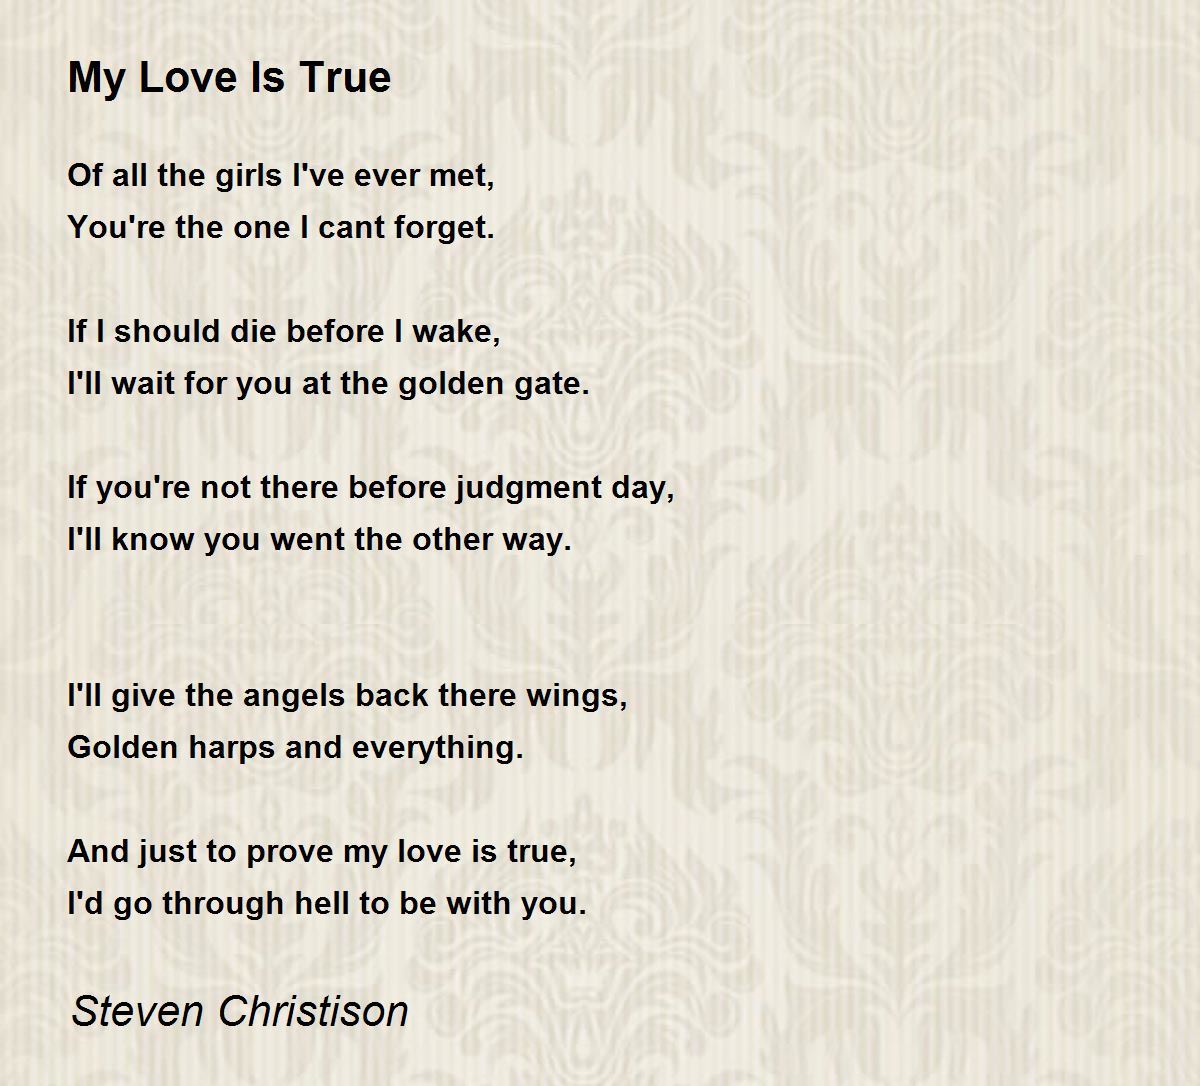 My Love Is True - My Love Is True Poem by Steven Christison